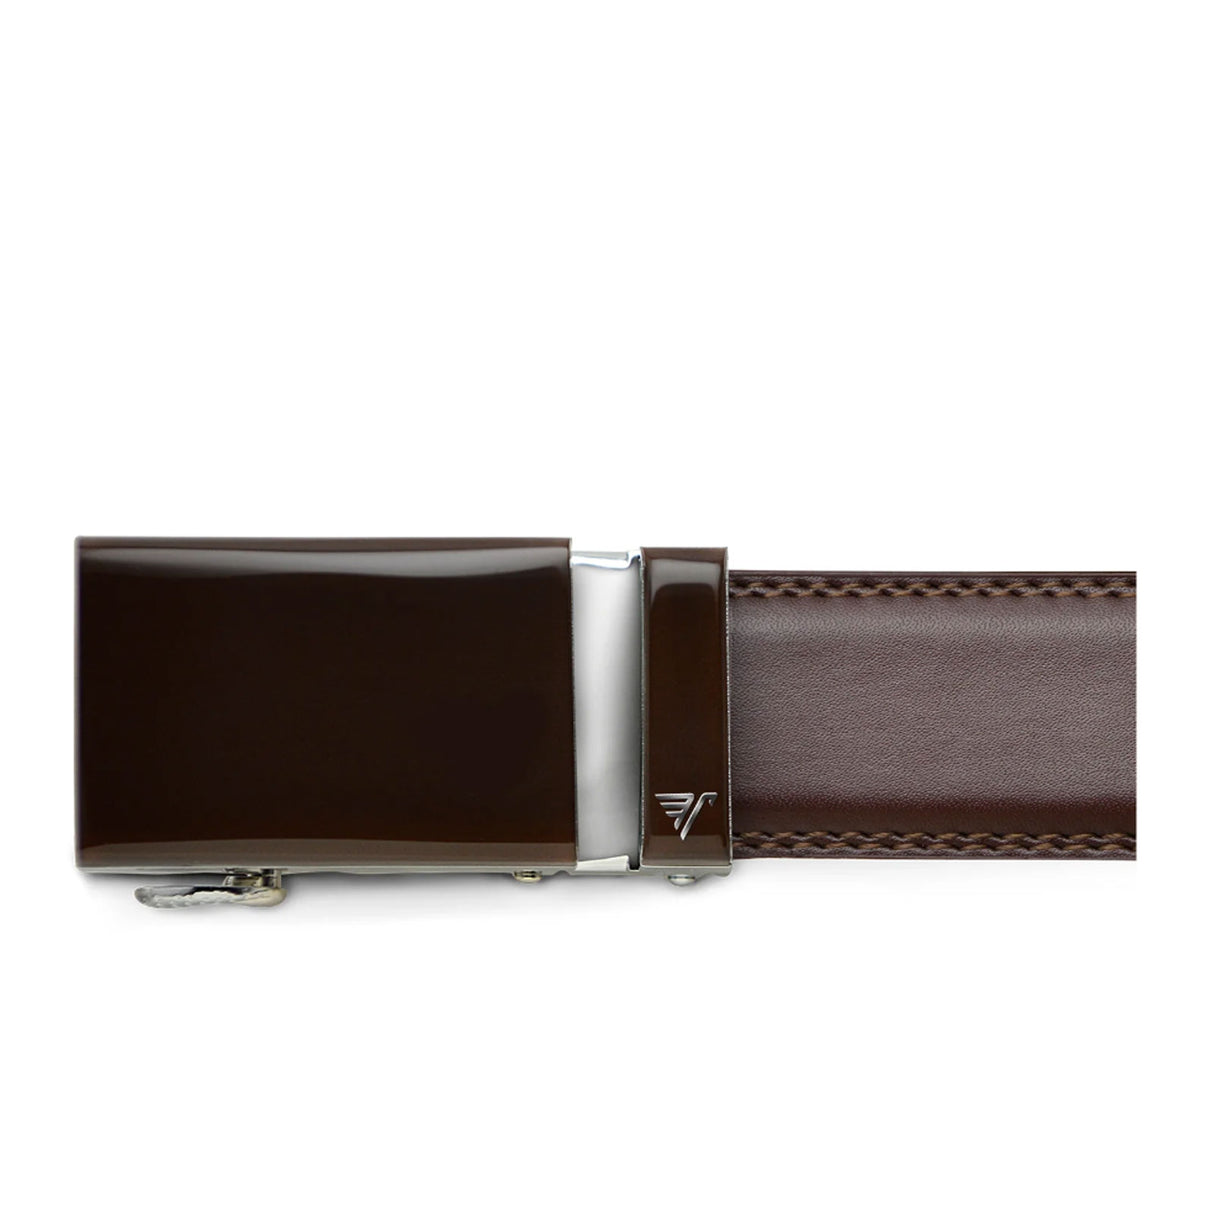 Mission Belts Leather Belt (Men) - Chocolate/Chocolate Brown Leather Accessories - Belts - Leather - The Heel Shoe Fitters